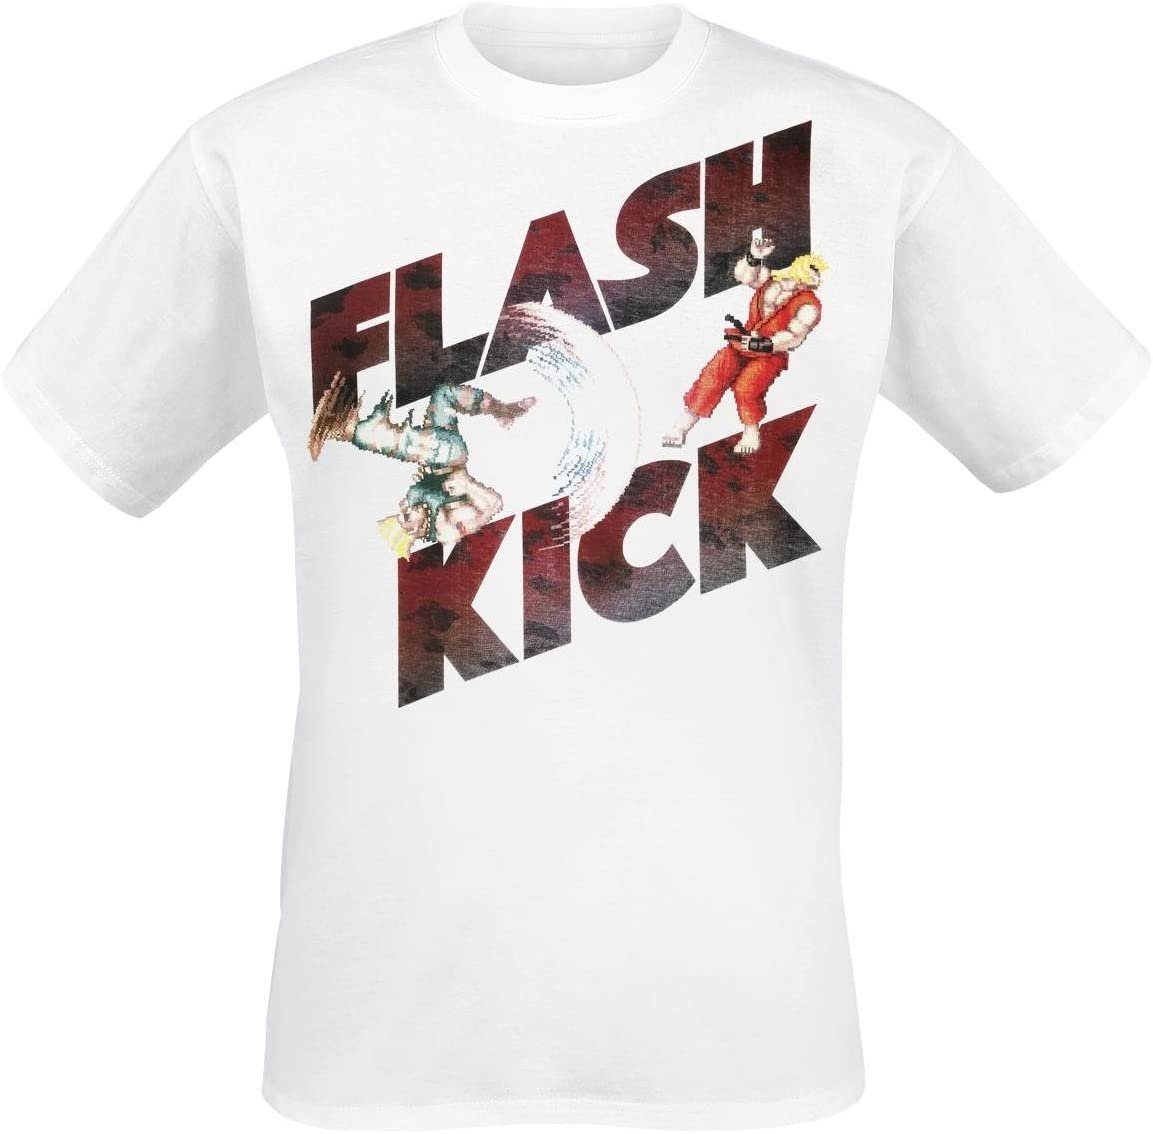 Streetfighter Print-Shirt Street Fighter T-Shirt Flash Kick weiß für Gamer, Zocker